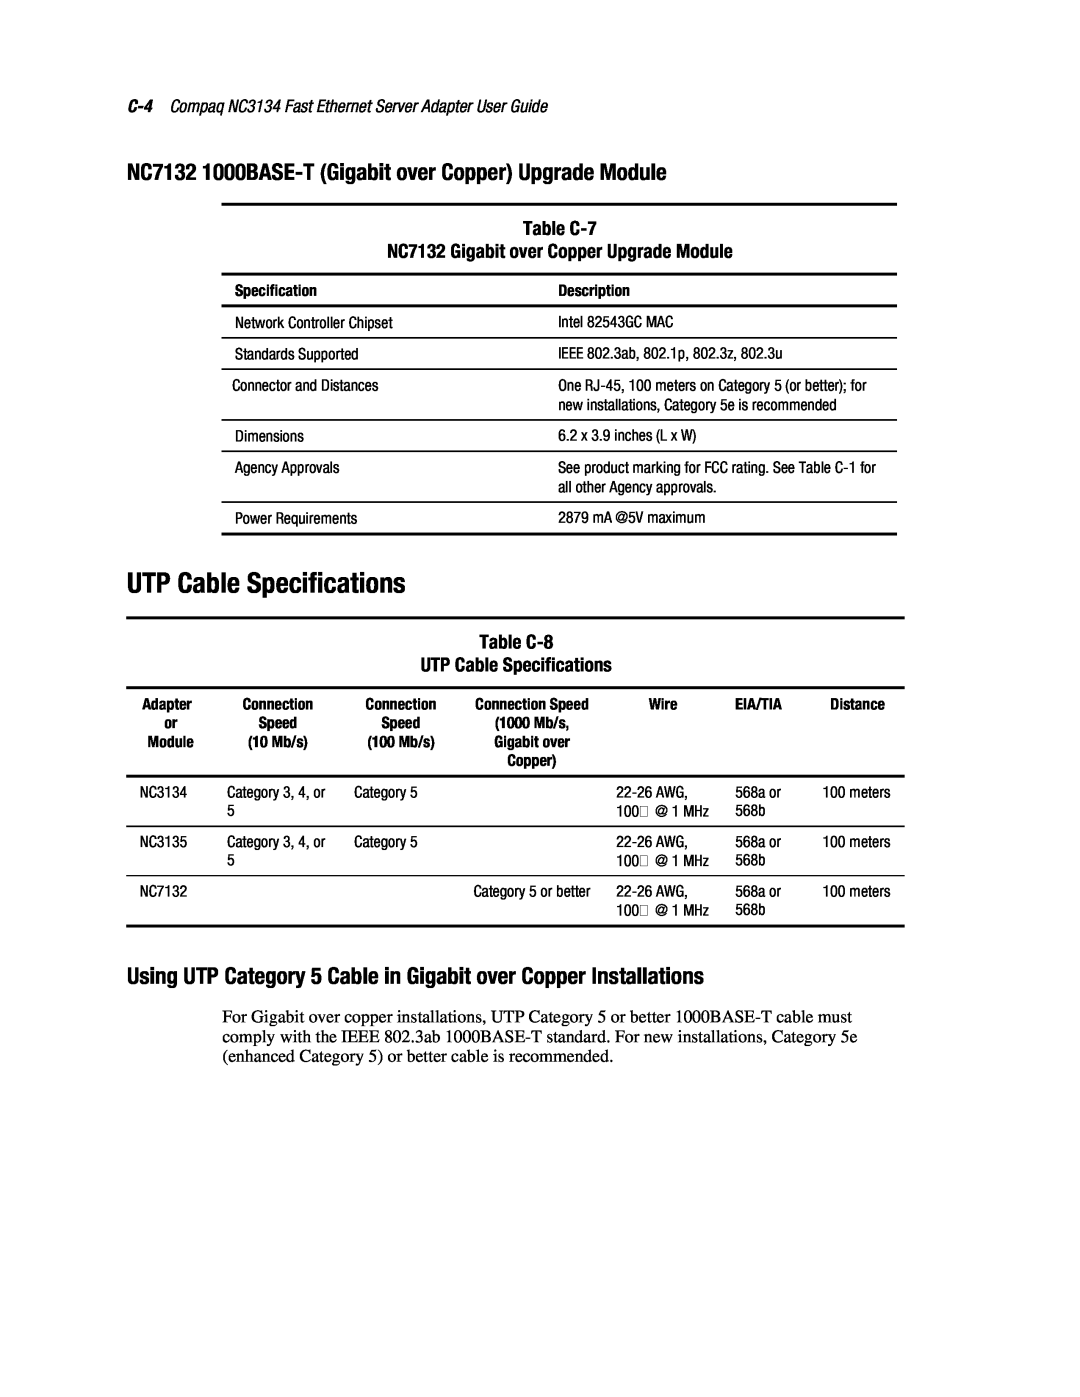 Compaq 3134 UTP Cable Specifications, NC7132 1000BASE-T Gigabit over Copper Upgrade Module, Description, Adapter, Wire 